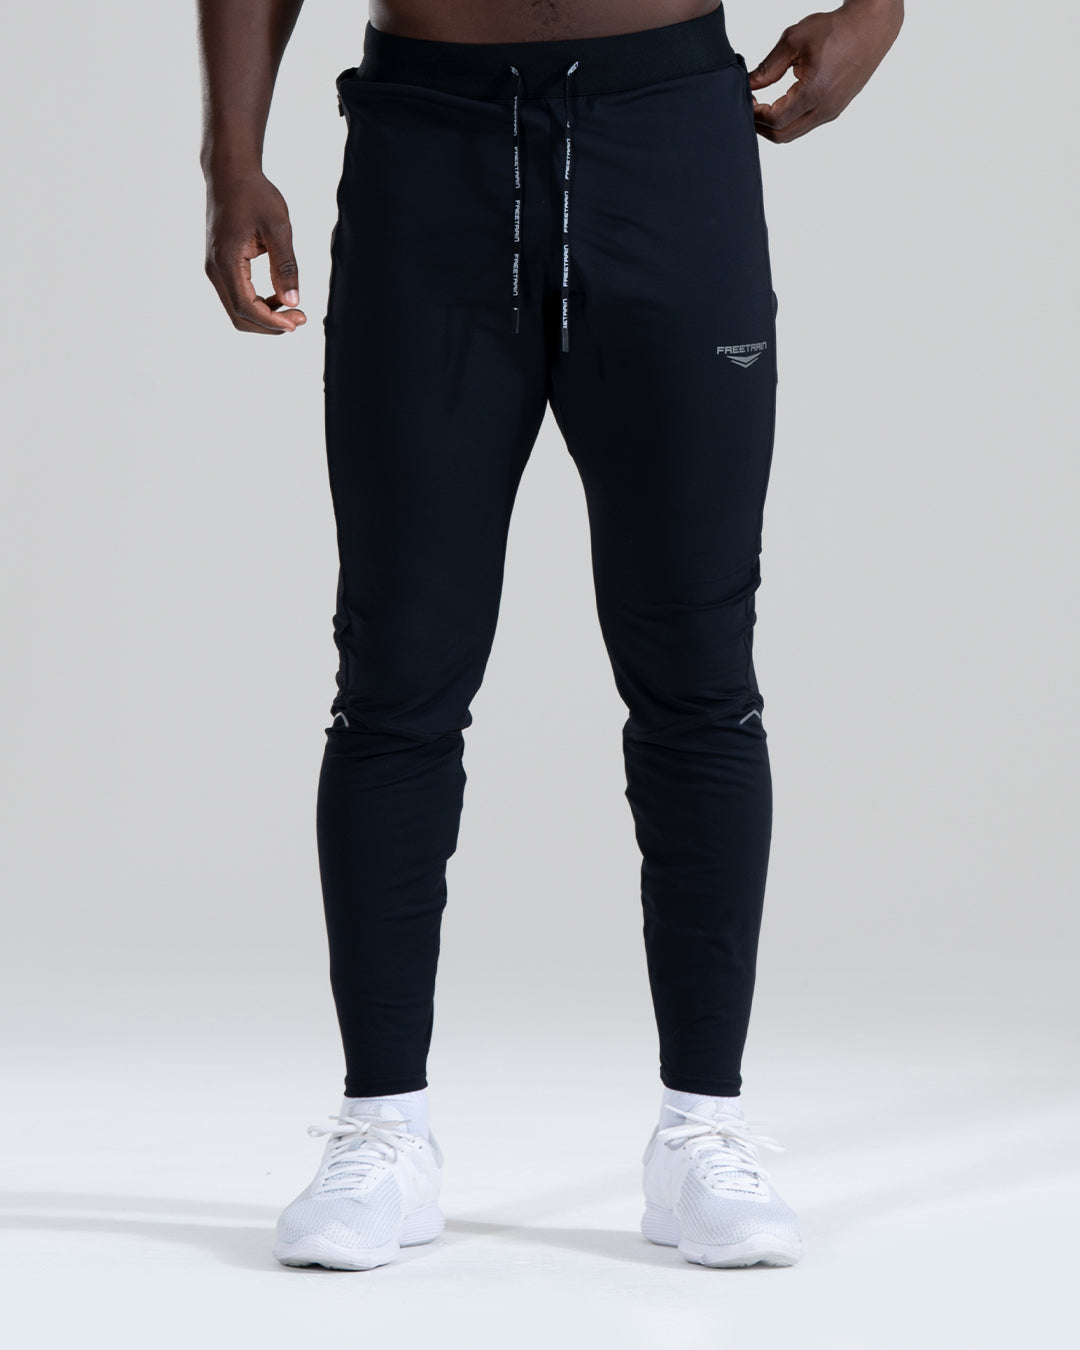 Gymshark Joggers Black Drawstring Pocket Sweatpants Men's Small Running